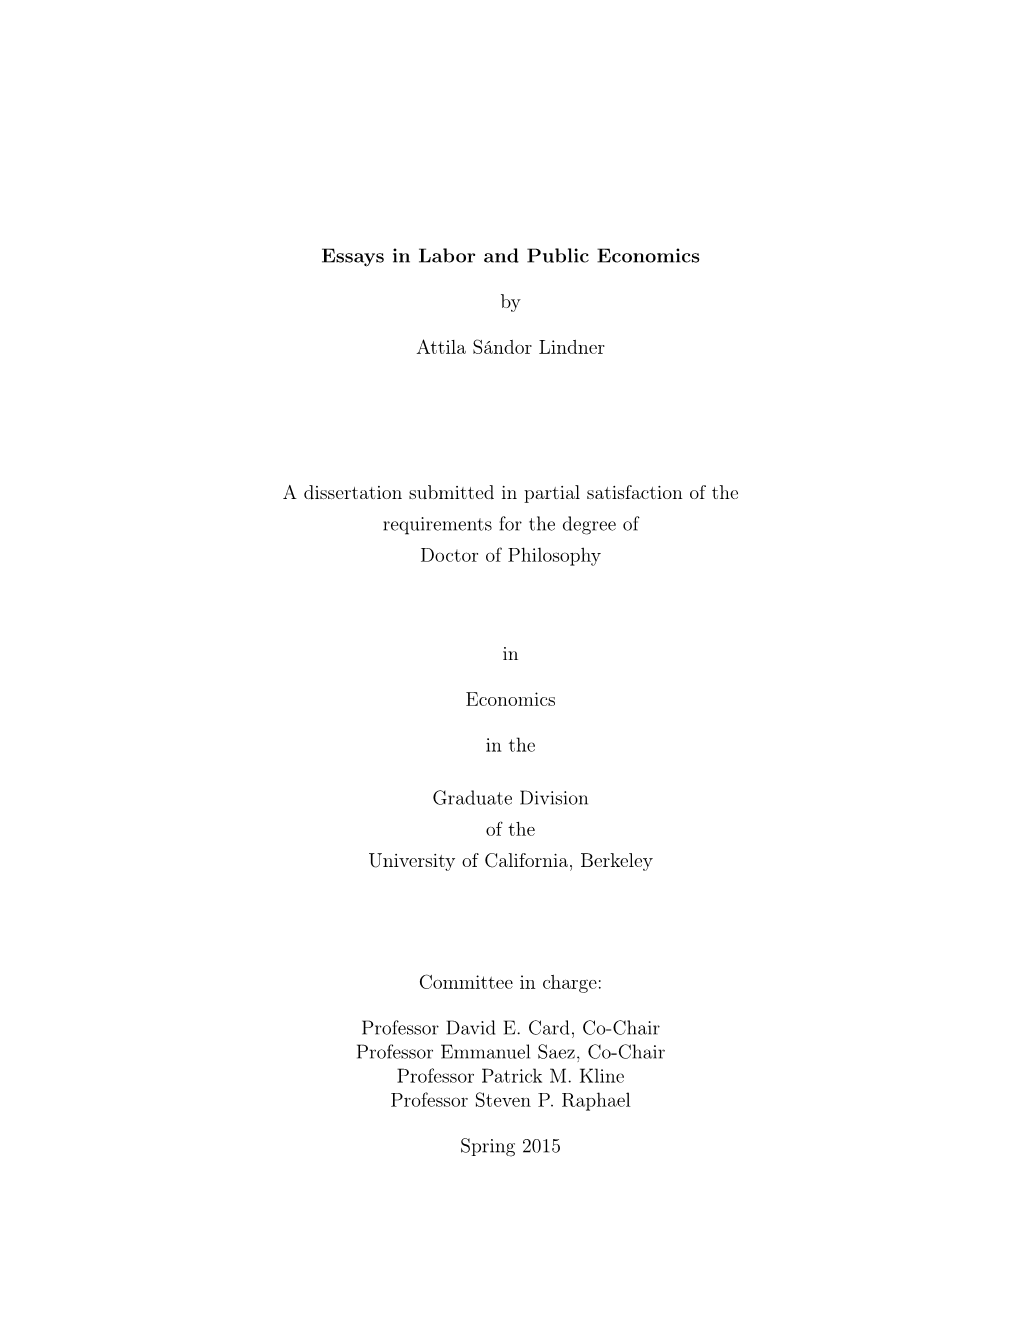 Essays in Labor and Public Economics by Attila Sándor Lindner